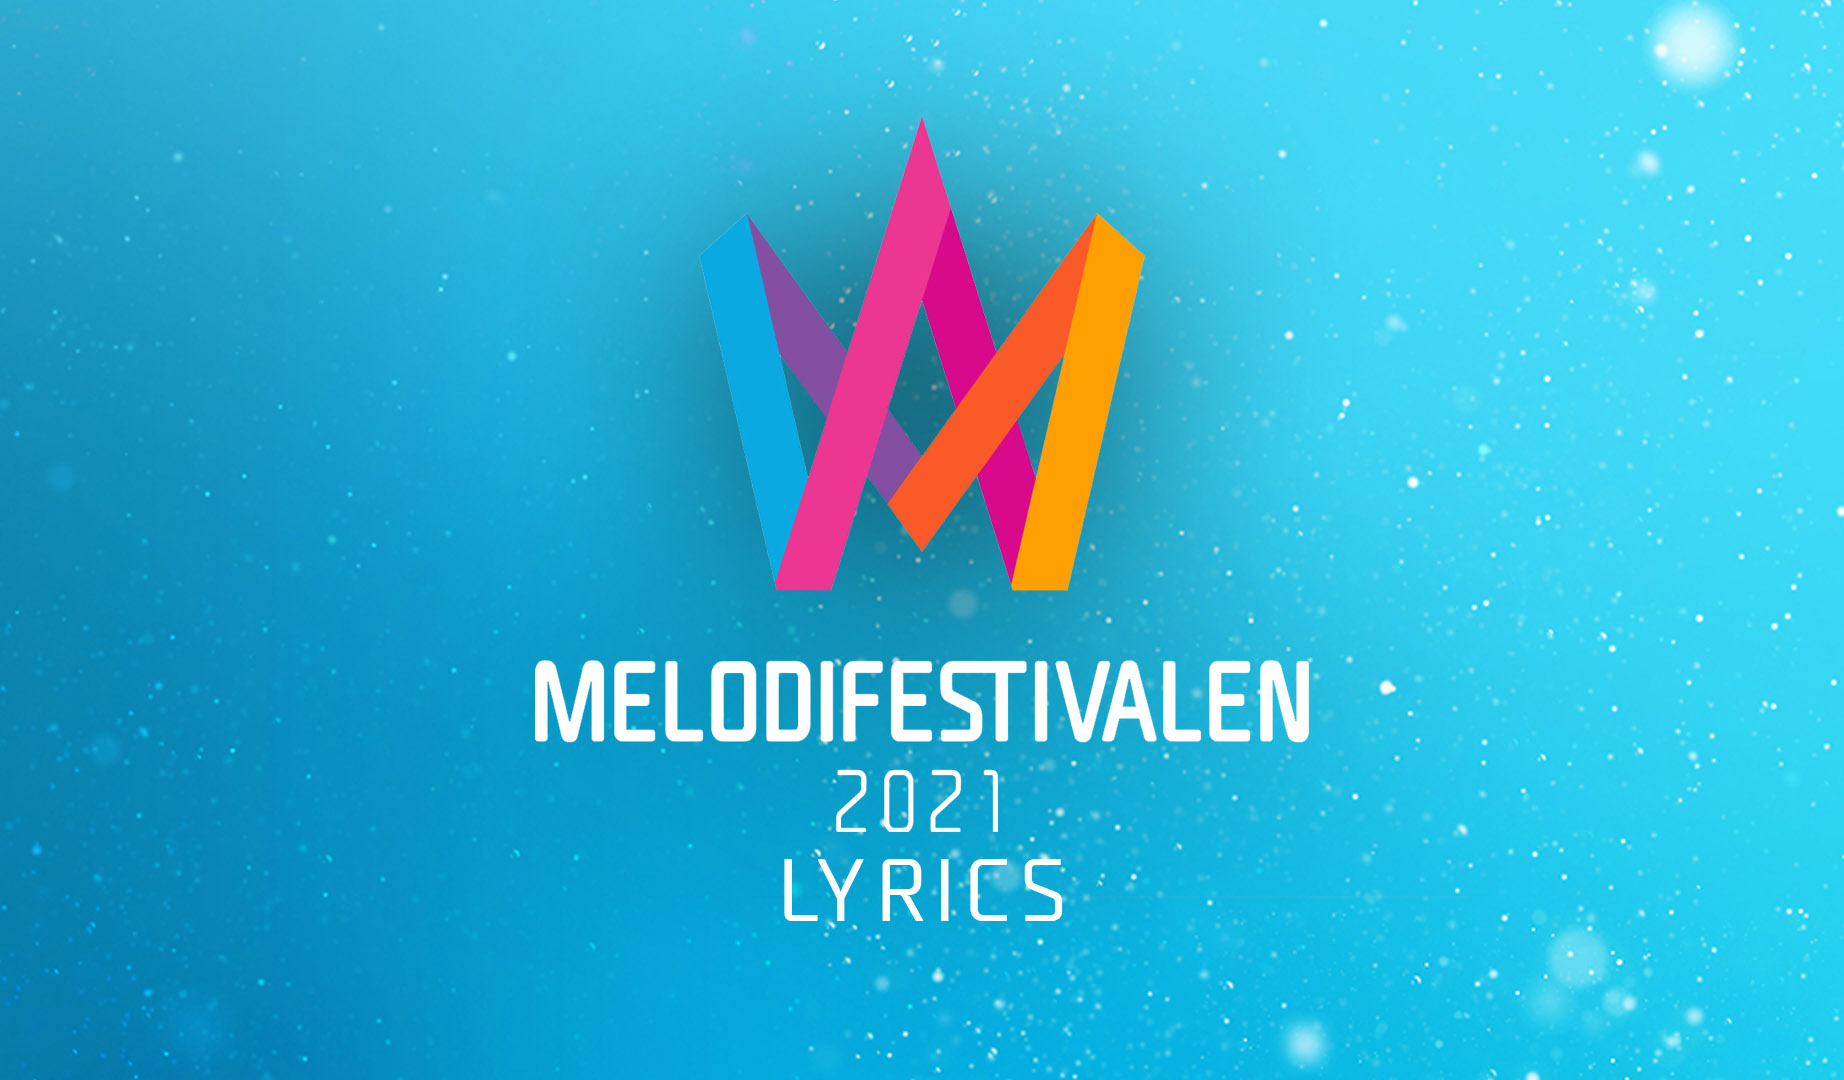 Sweden: Lyrics of Melodifestivalen 2021 semi-final 4 announced